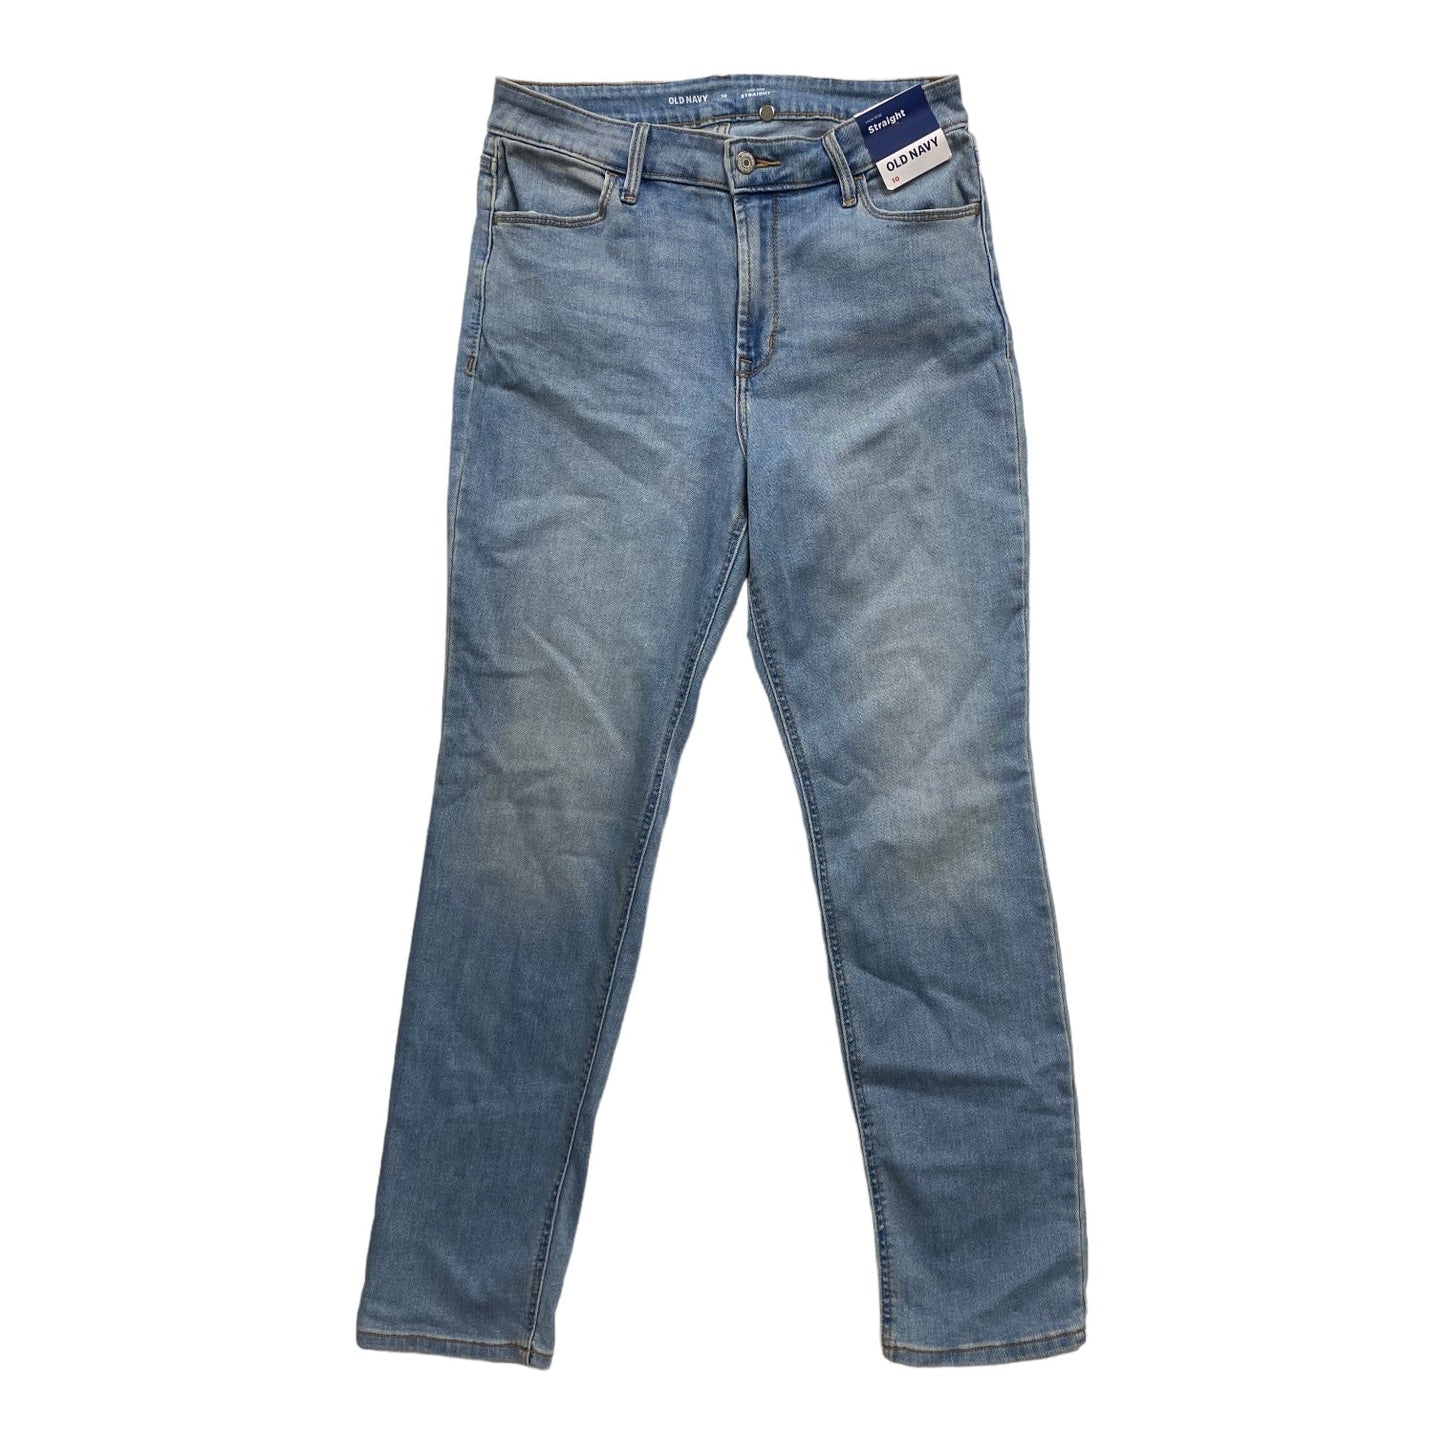 Blue Denim Jeans Skinny Old Navy, Size 10